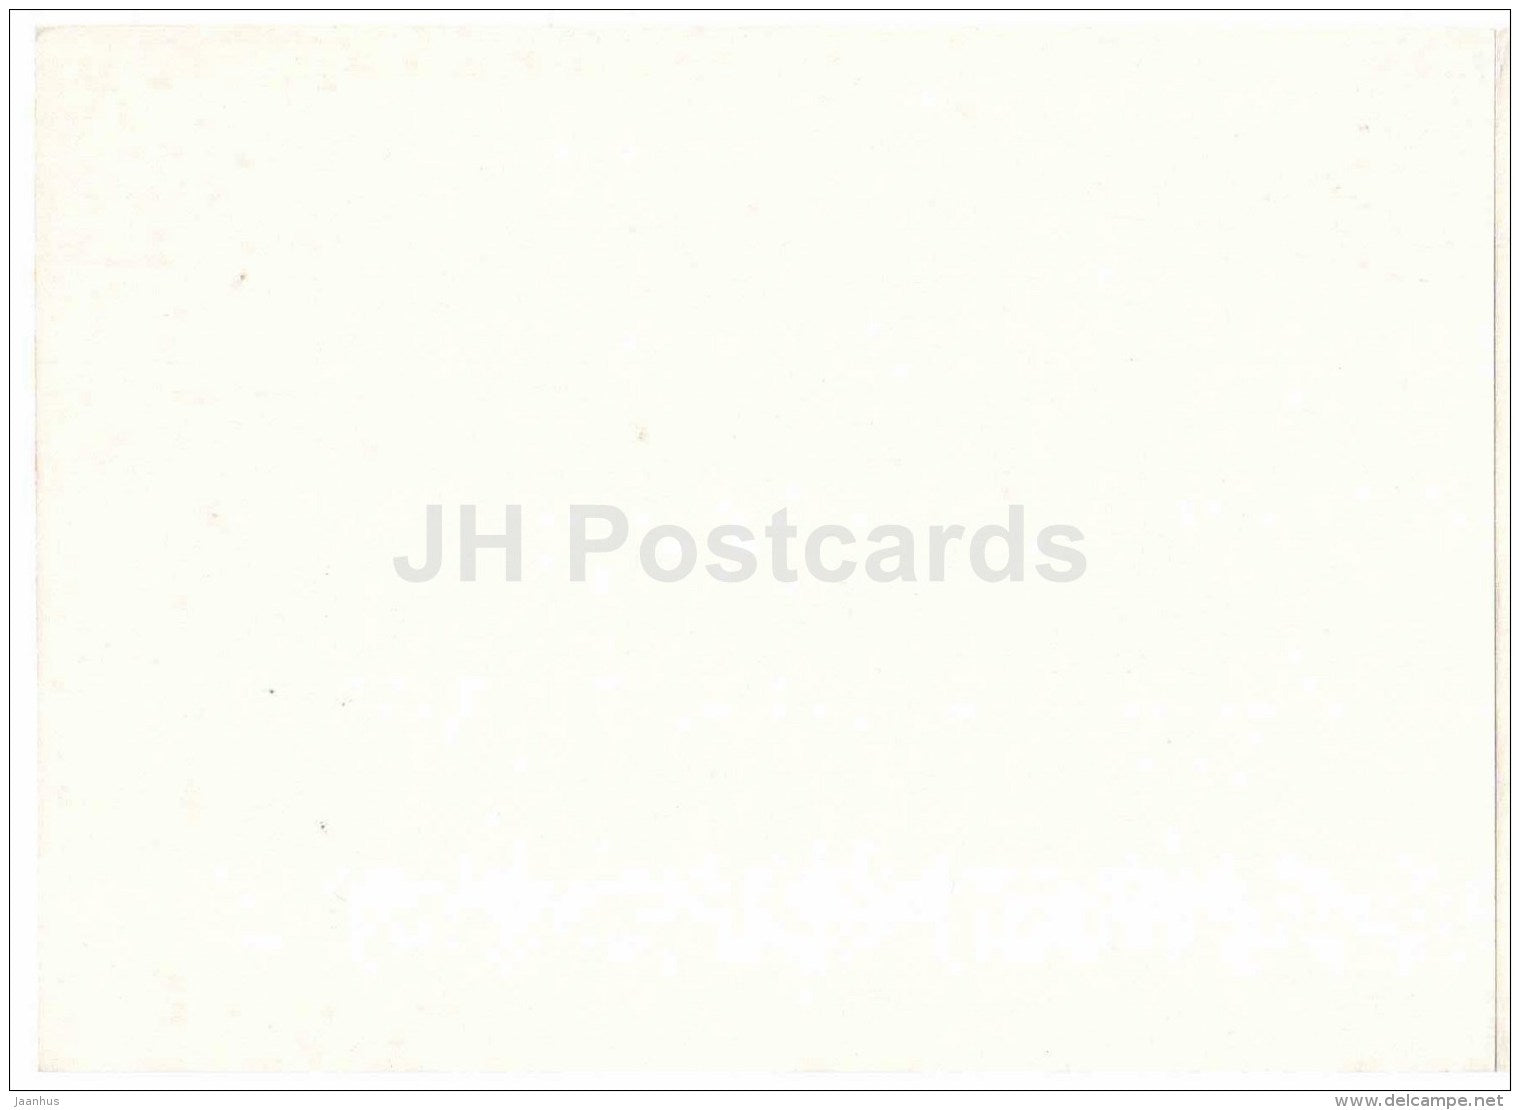 New Year greeting card - fir tree - cone - Estonia USSR - unused - JH Postcards